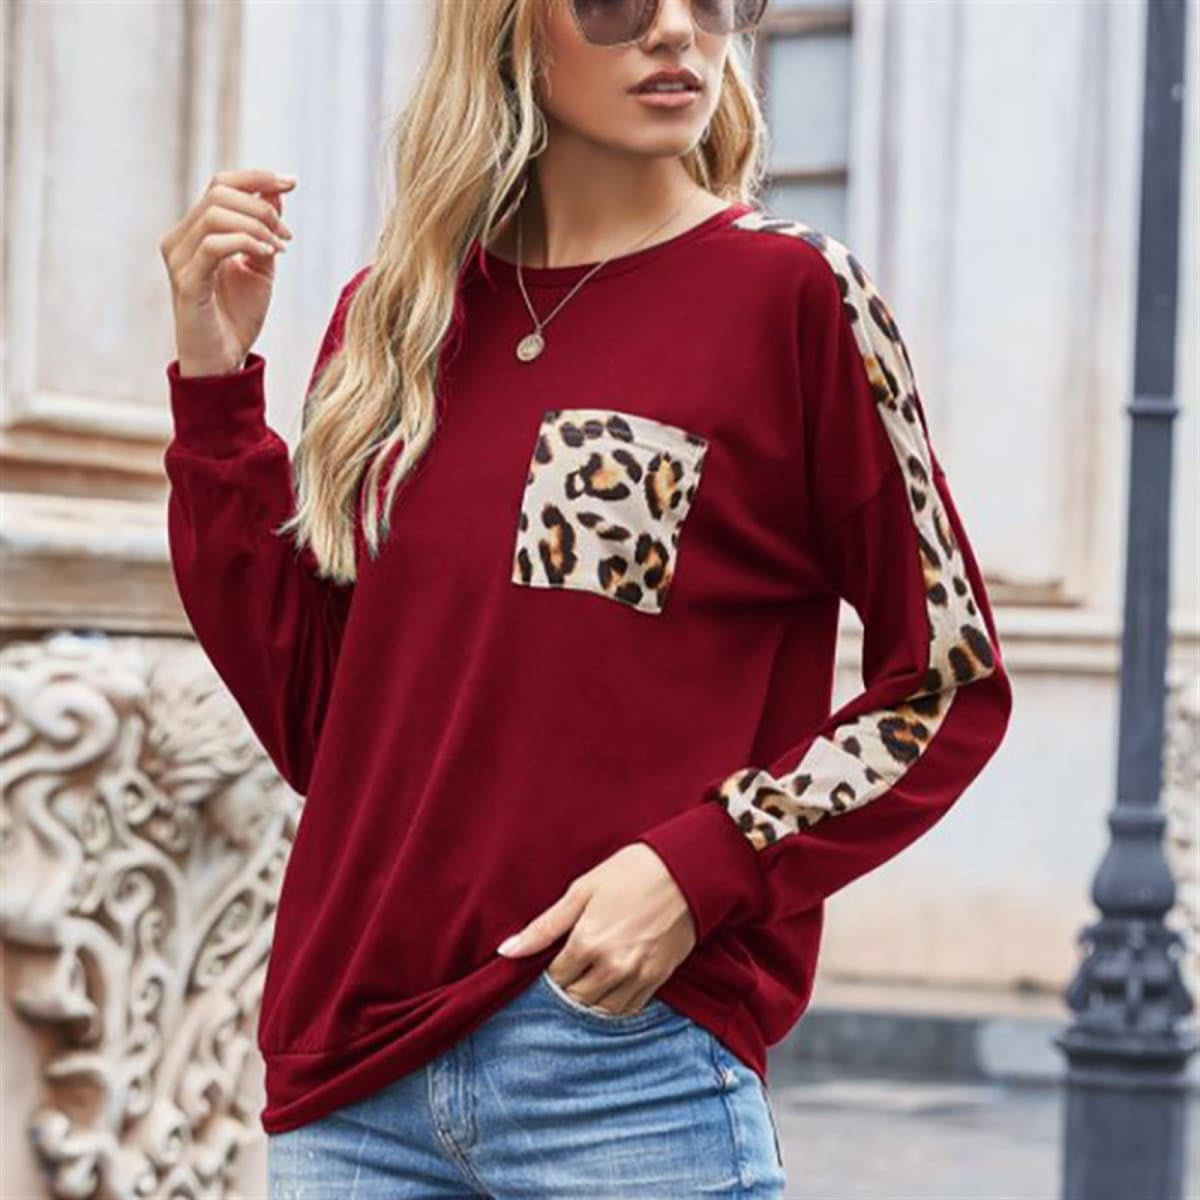 Fekuit Womens Pullover Tops Casual Sweatshirt Crewneck Long Sleeve Sweaters Fashion Animal Print Blouses